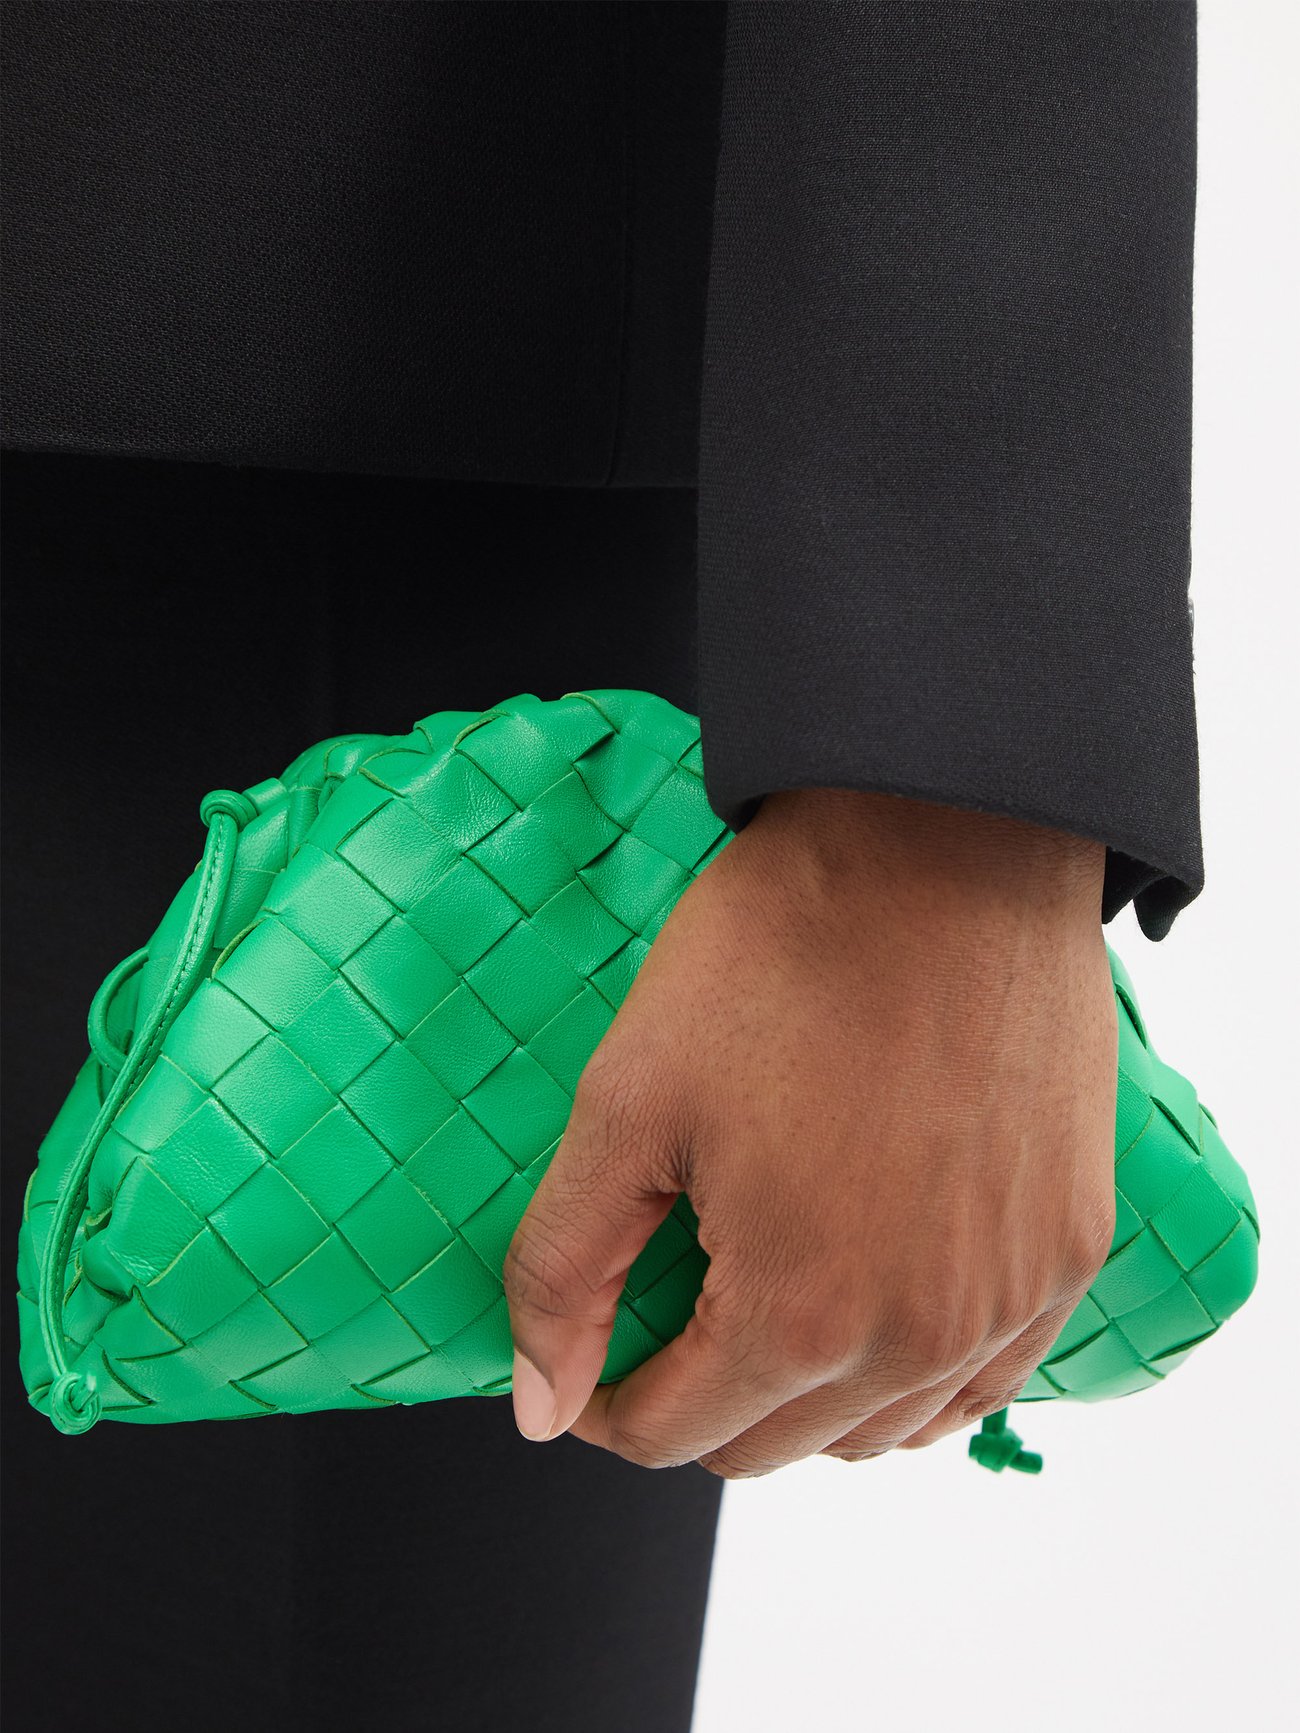 Green Pouch Intrecciato-leather shoulder bag, Bottega Veneta